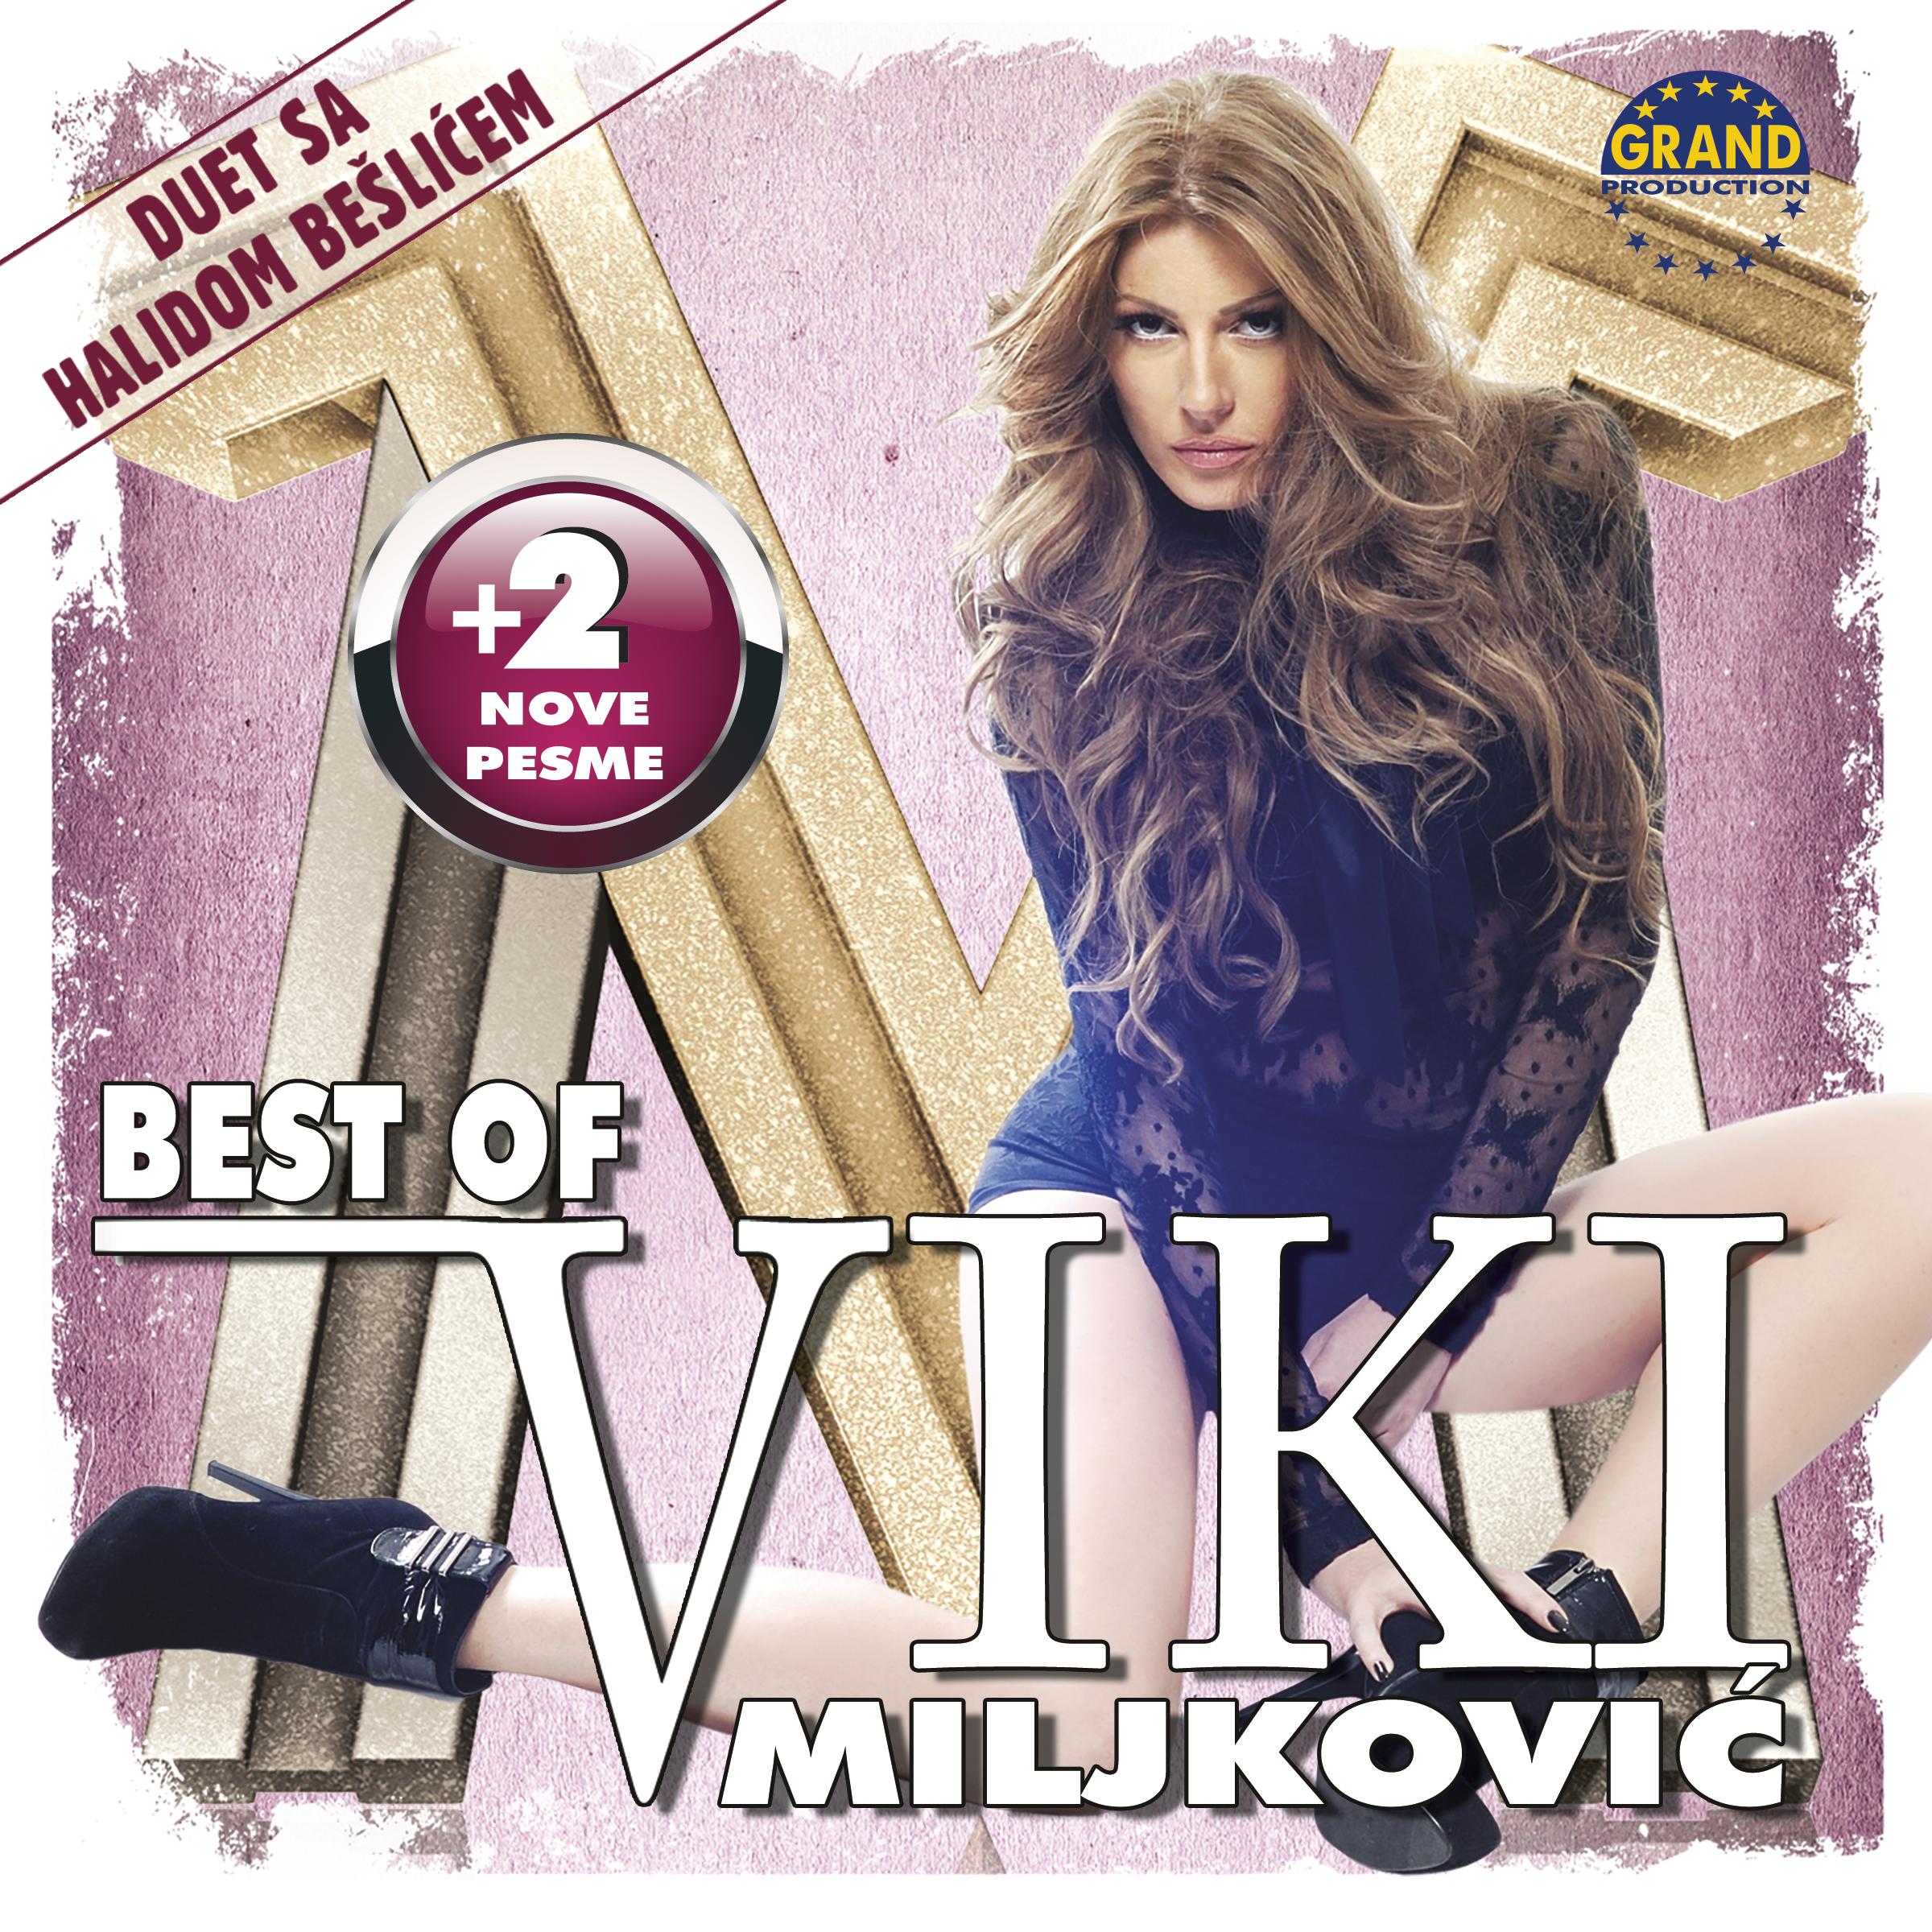 Viki Miljkovic - Best of 2011